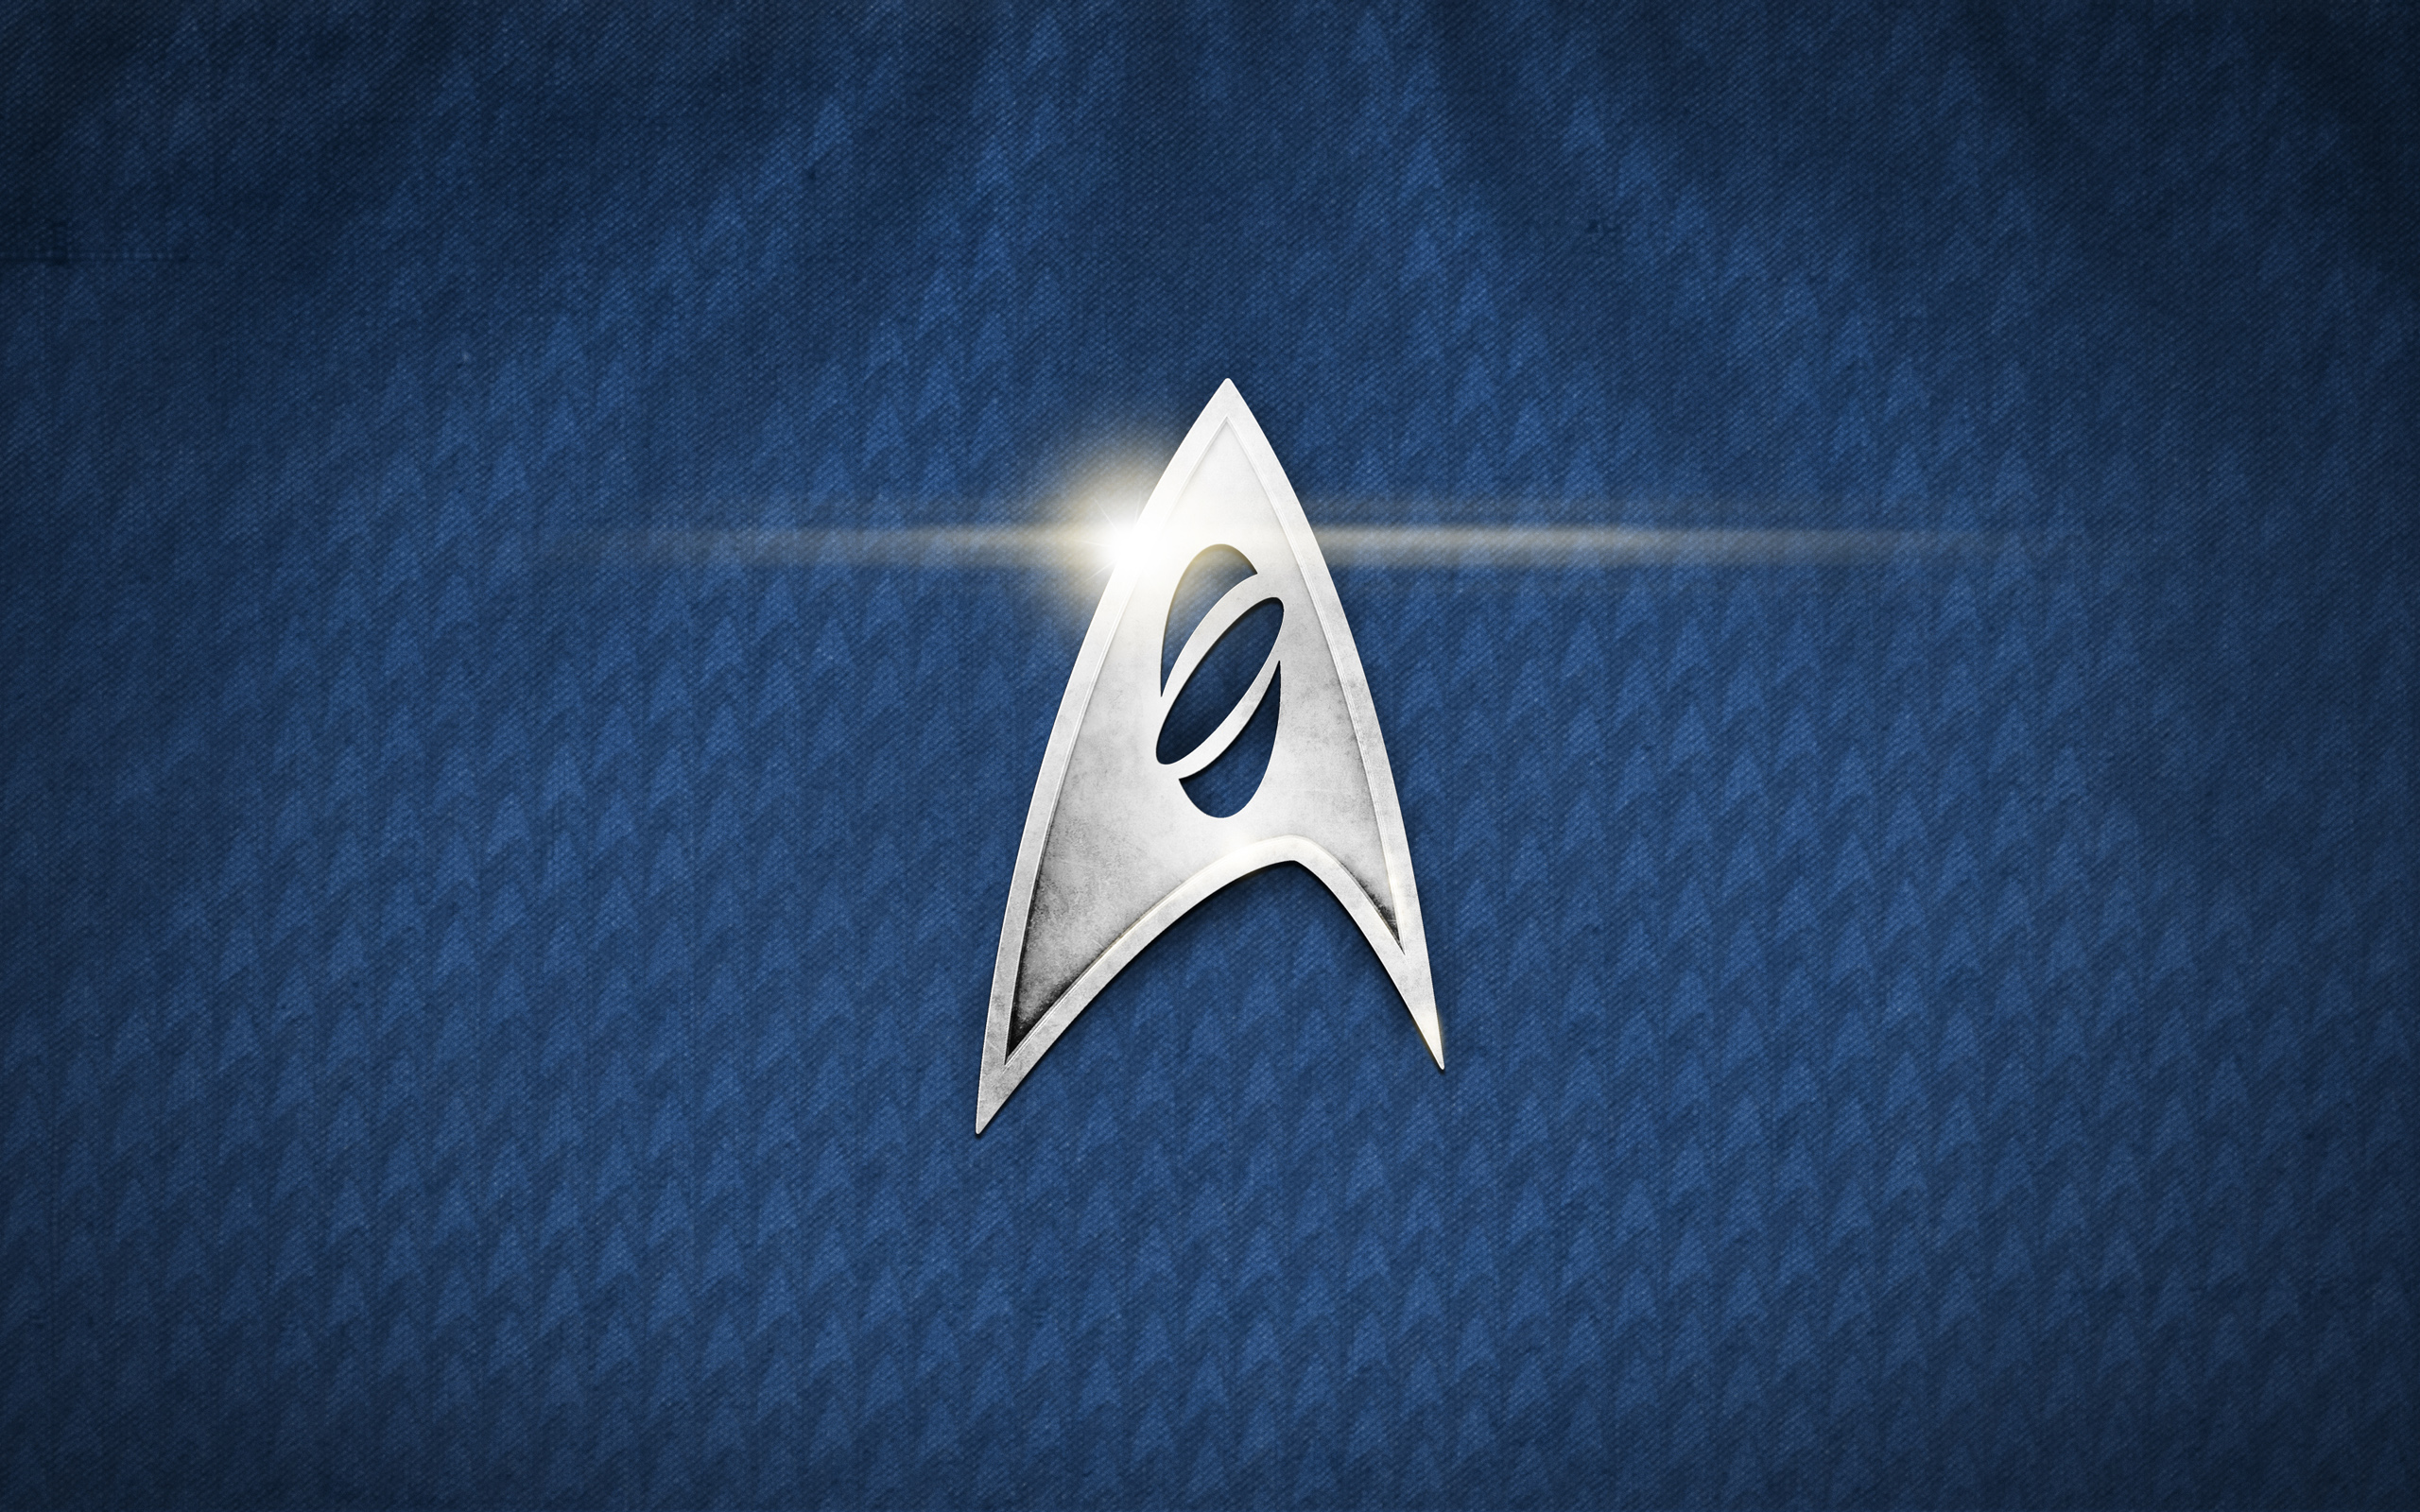 Logo Star Trek Wallpapers | Wallpapers, Backgrounds, Images, Art ...